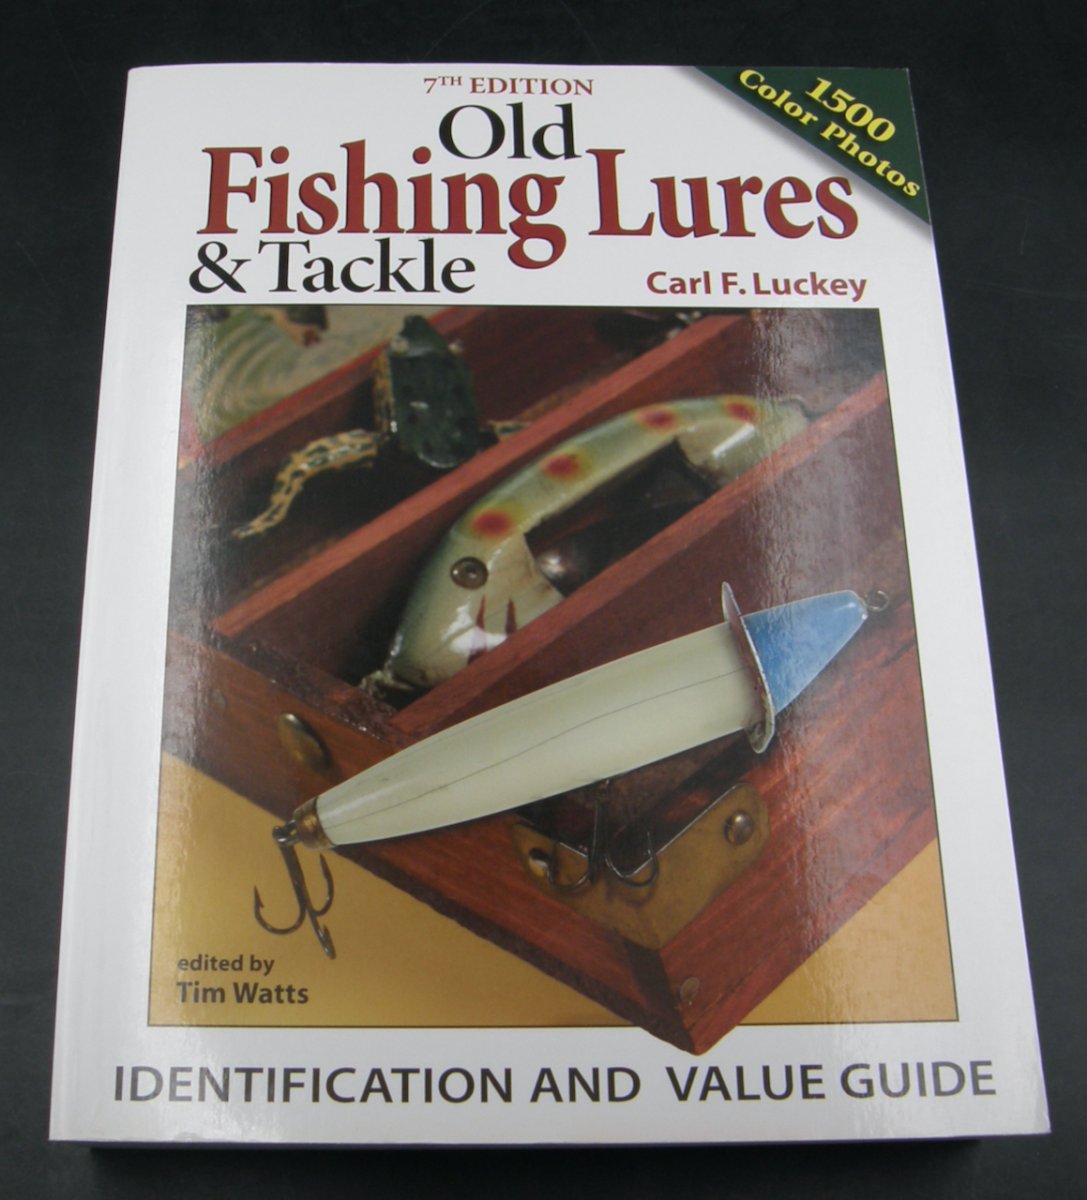  Antique Fishing Lures: Books